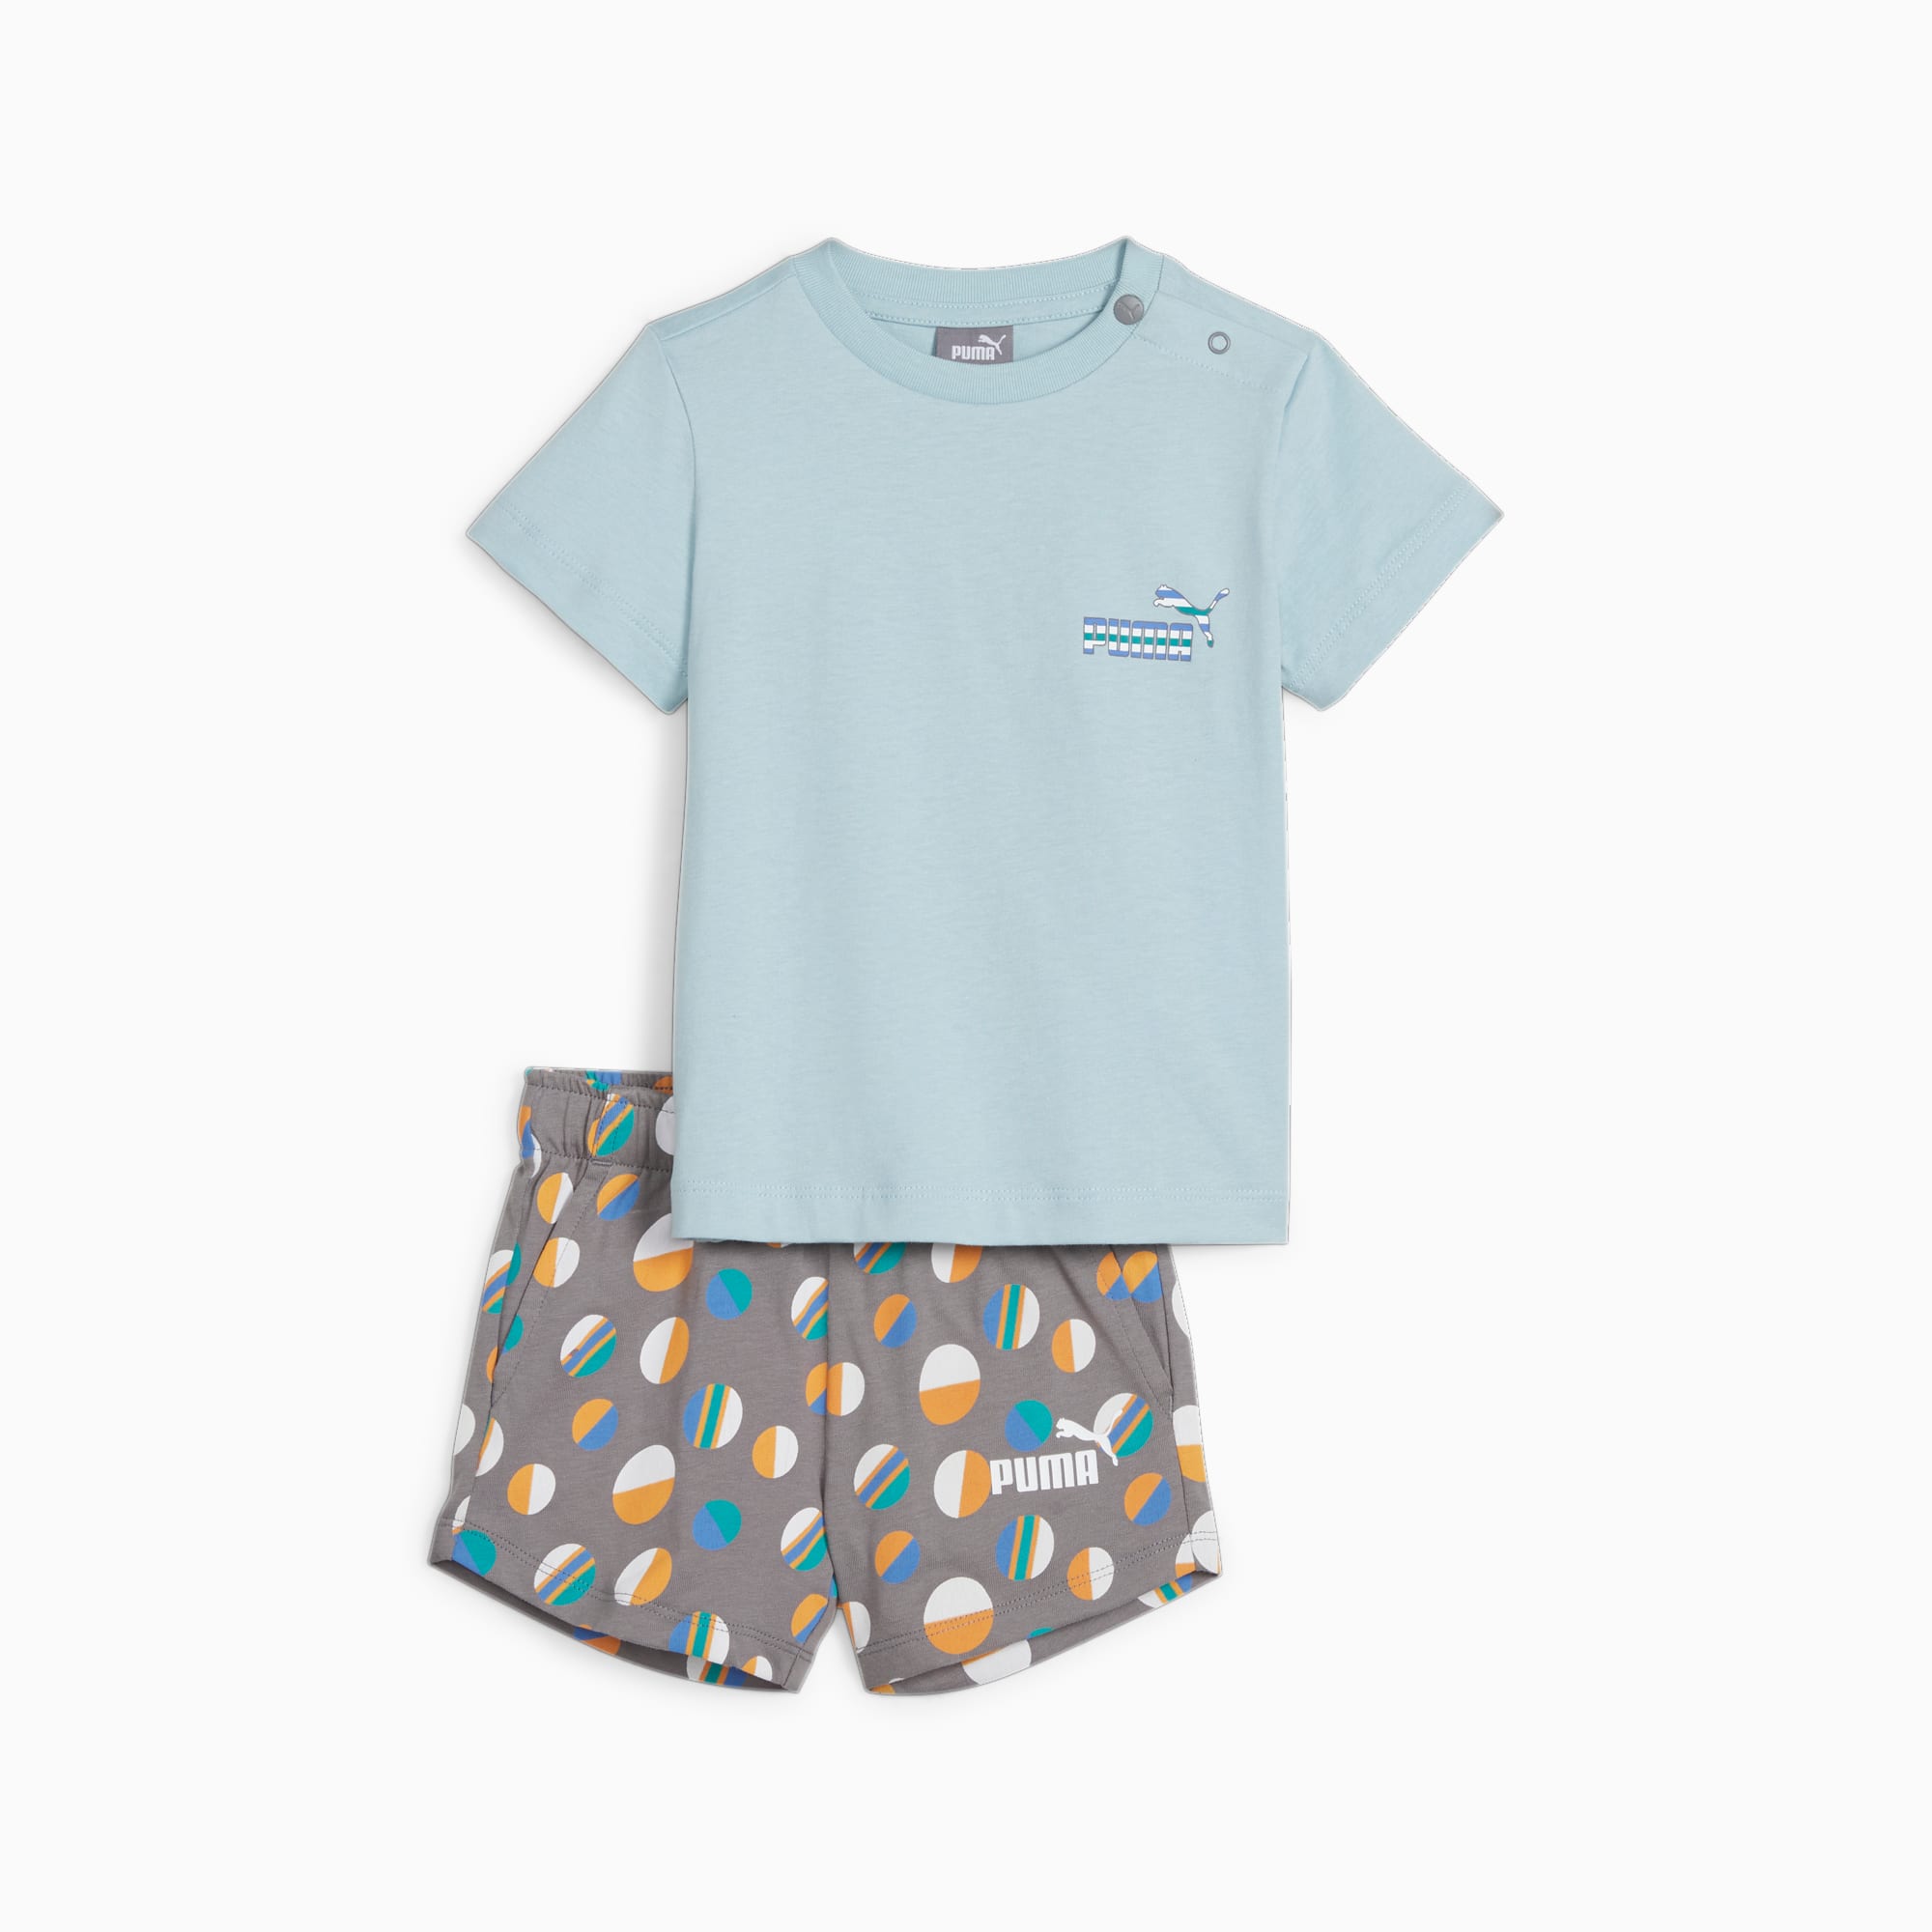 PUMA Ess+ Summer Camp Baby Set, Turquoise Surf, Size 62, Clothing